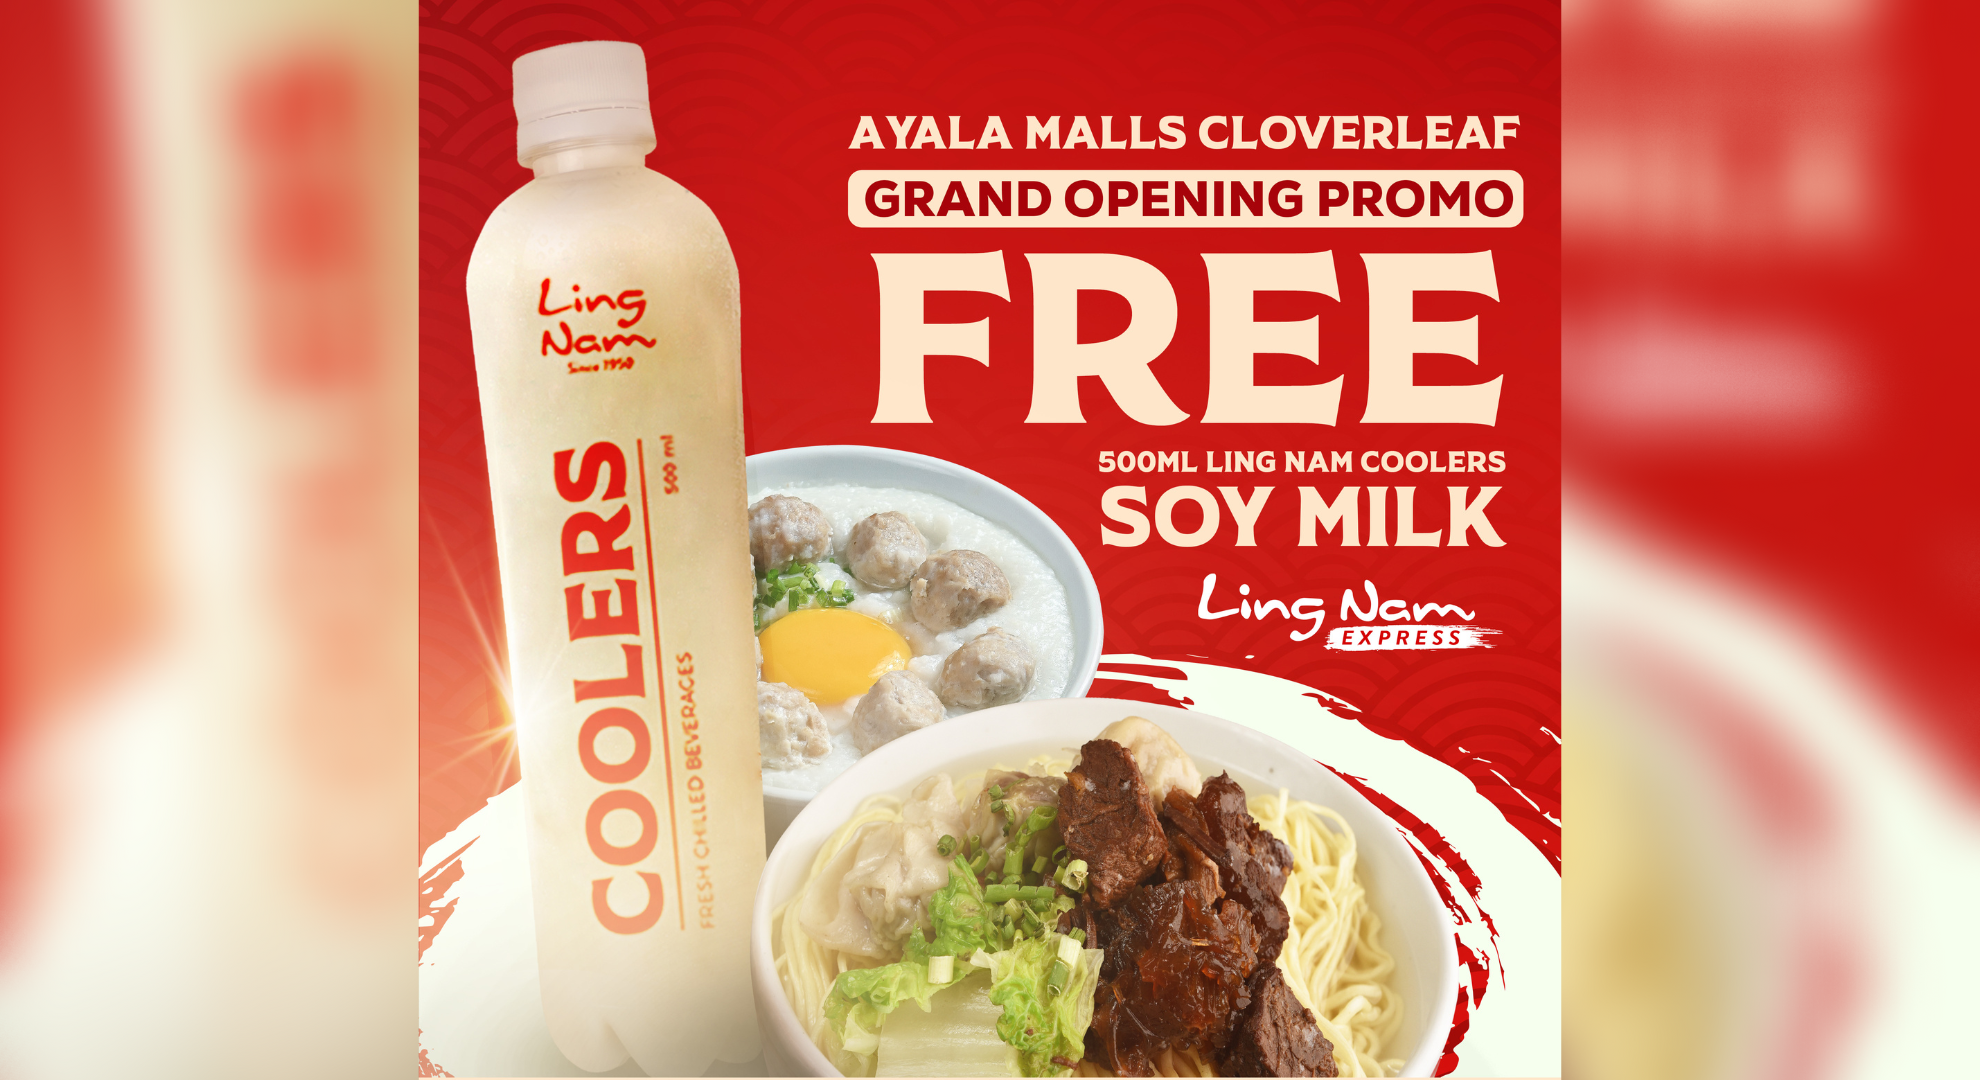 Ling Nam Express Grand Opening at Ayala Malls Cloverleaf